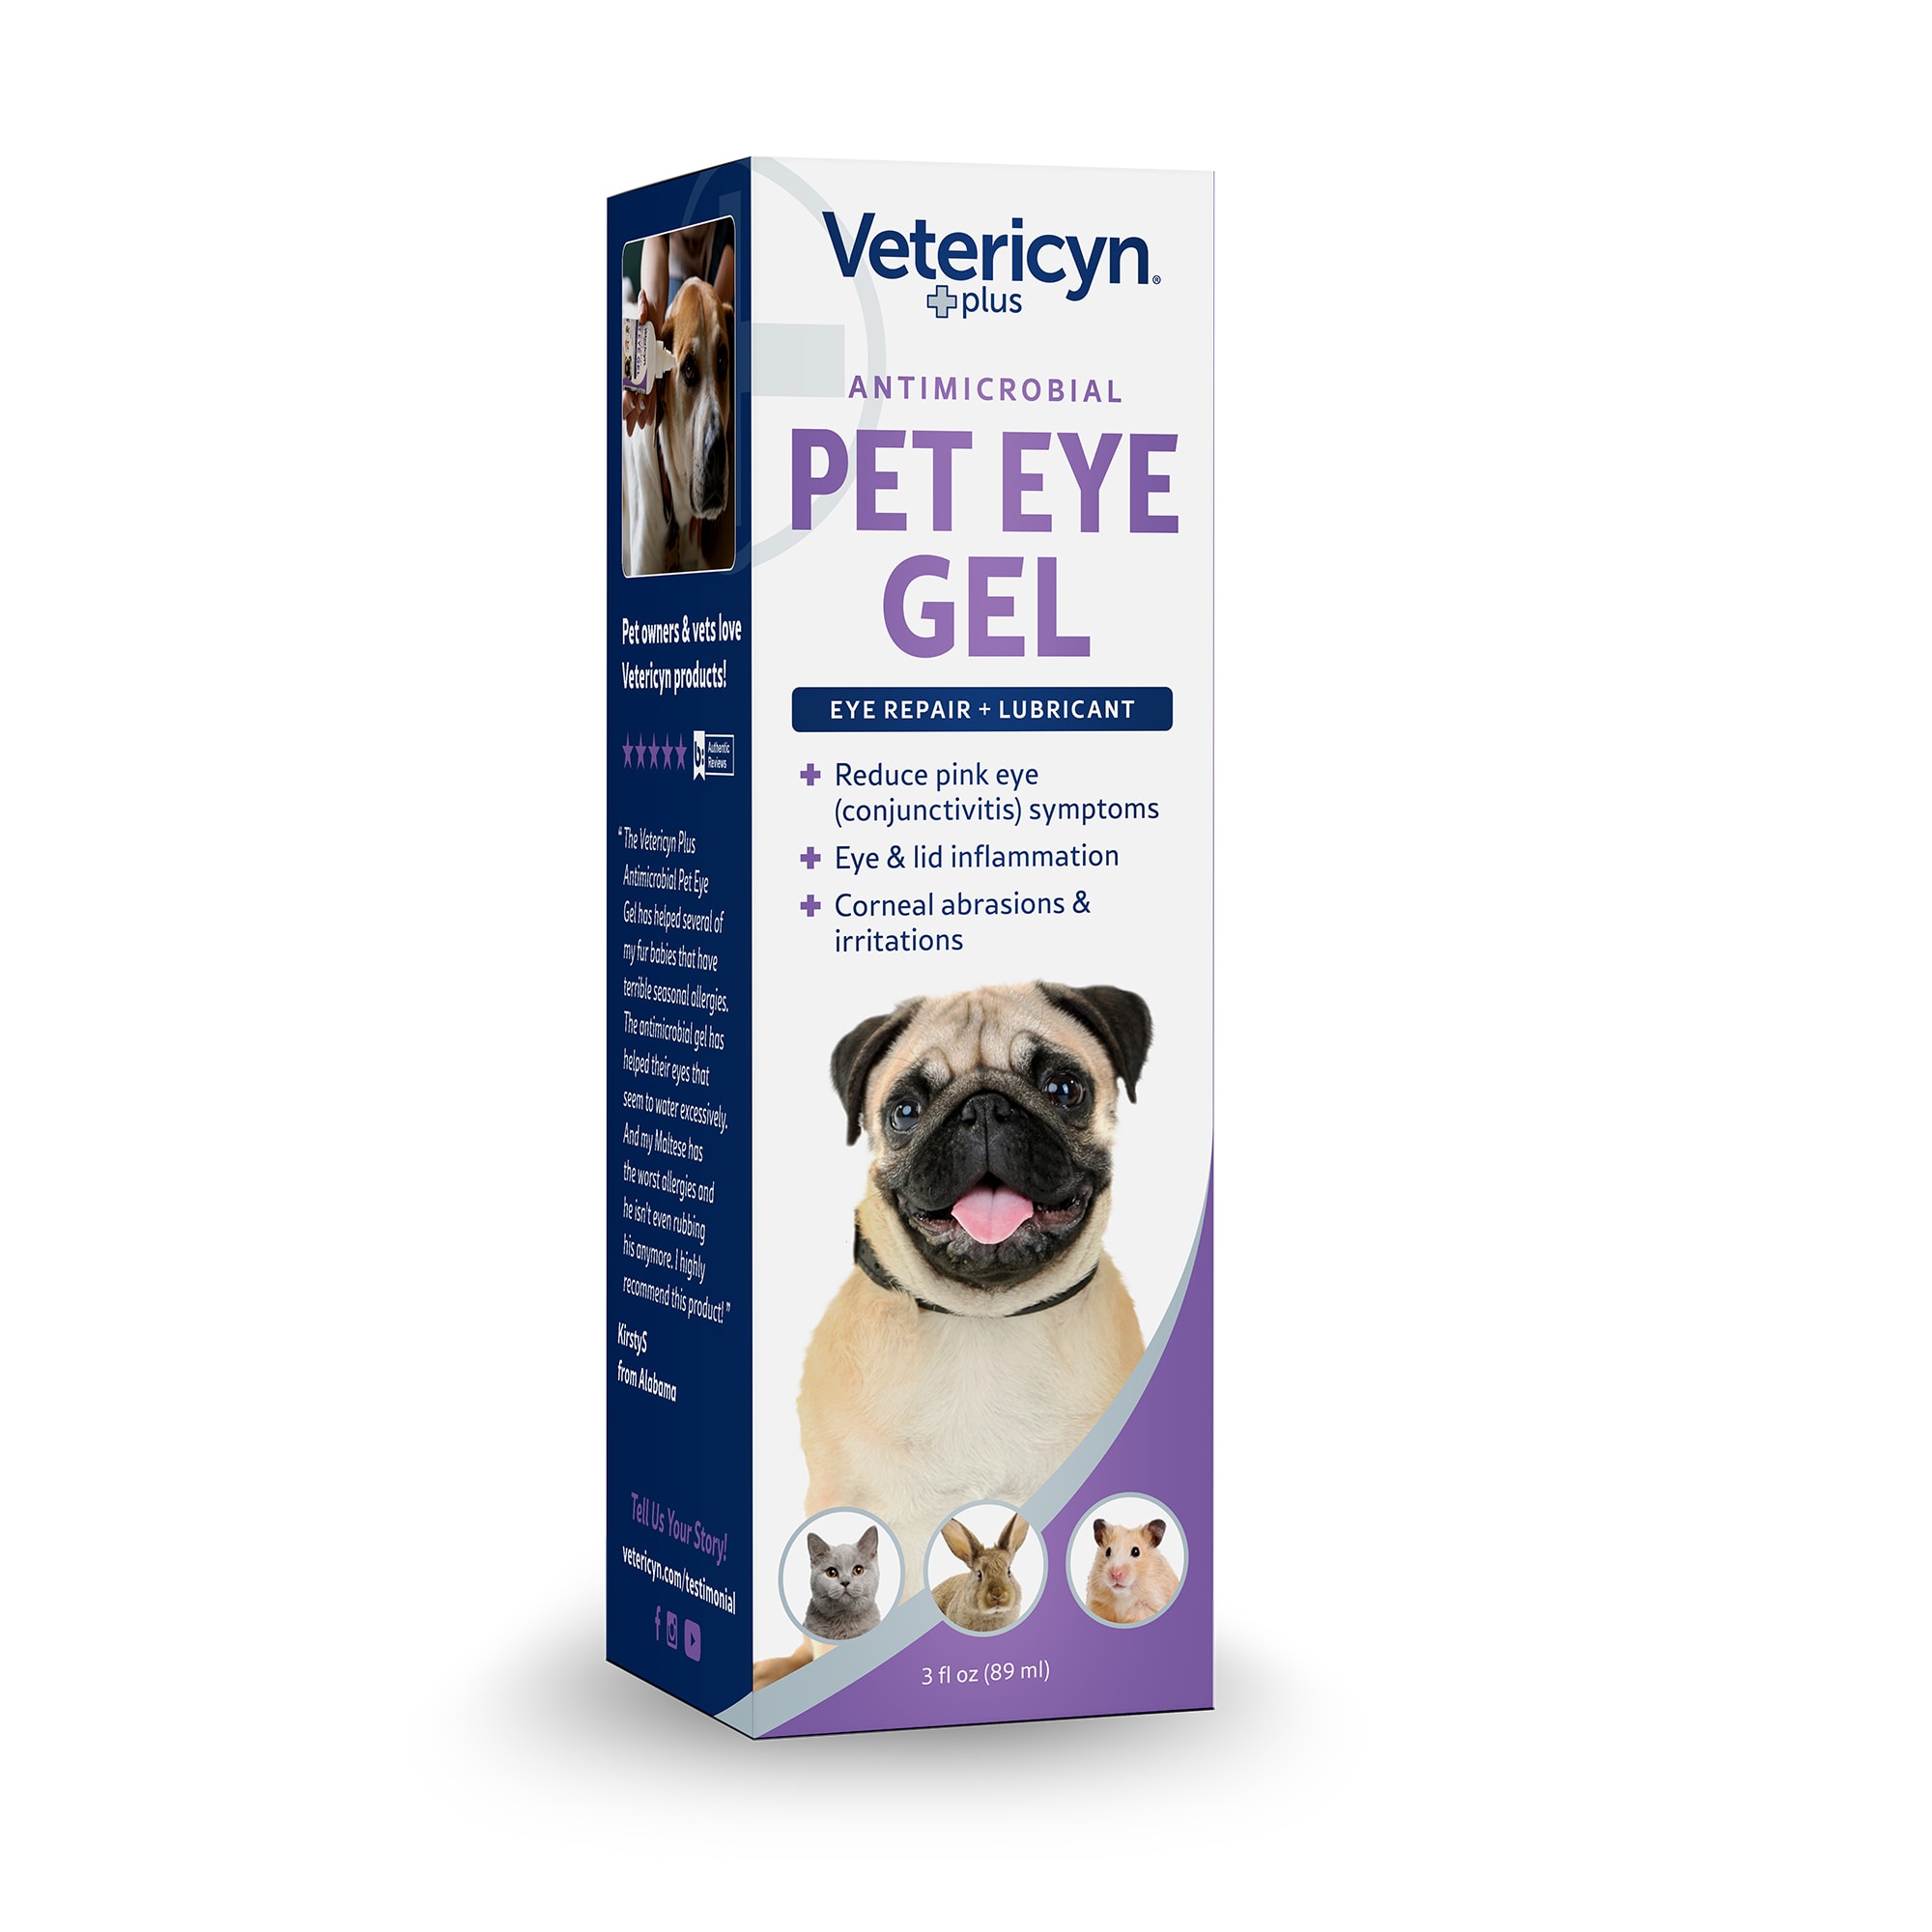 Vetericyn Antimicrobial Pet Eye Gel, 3 fl. oz.